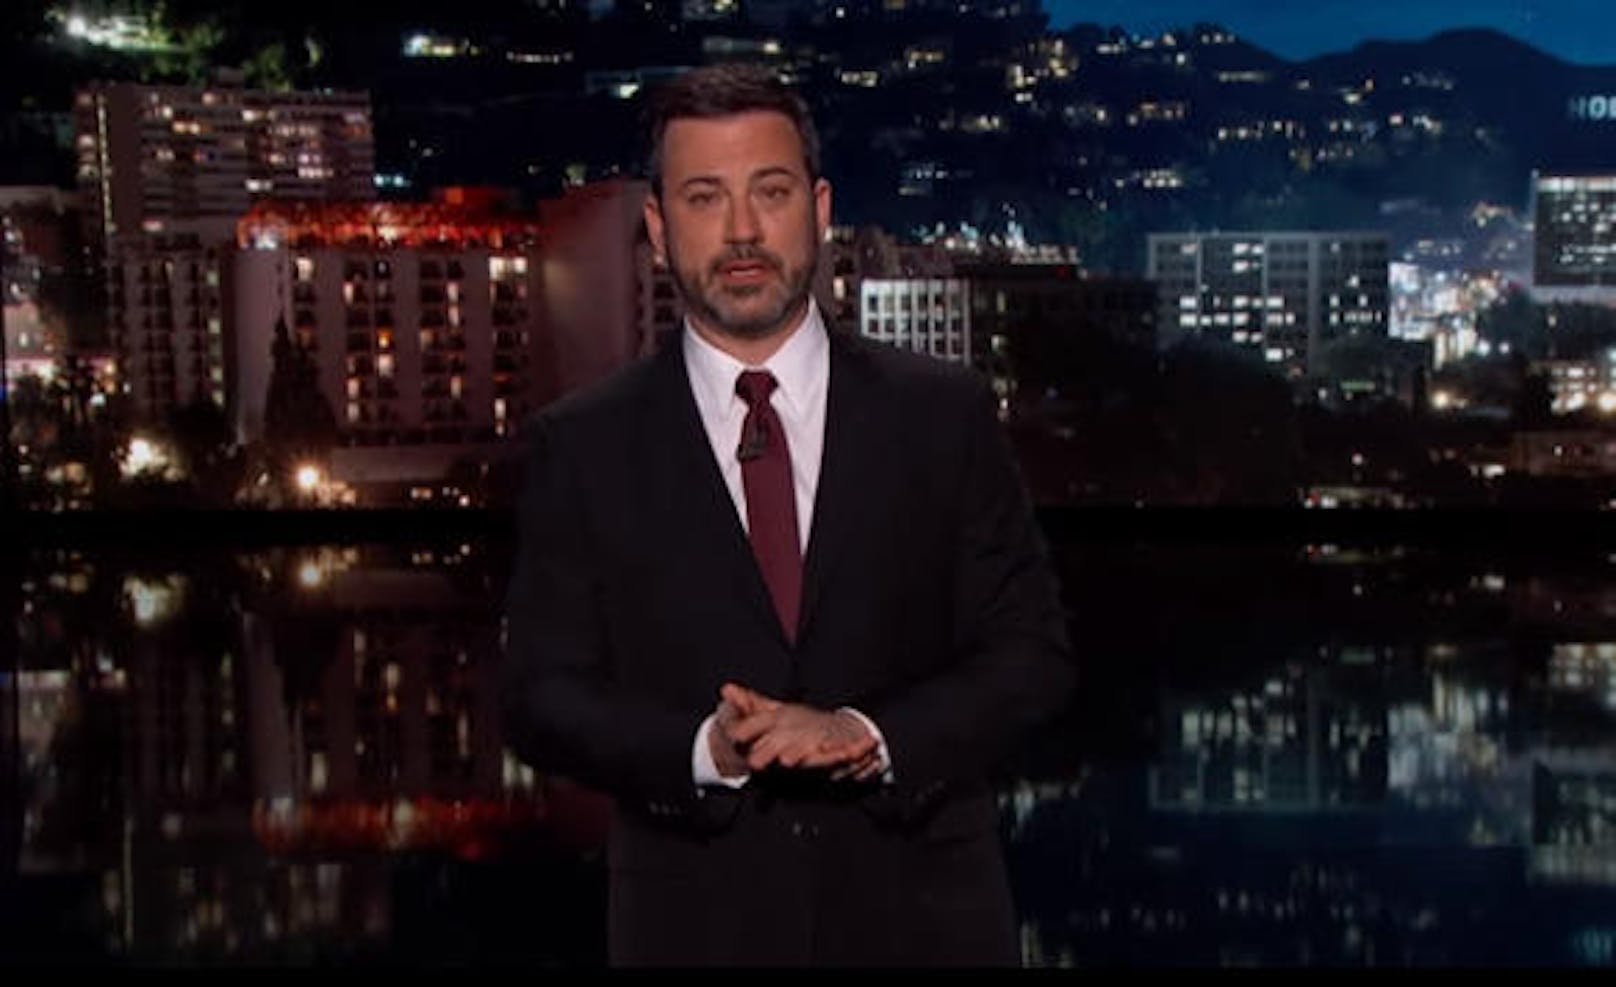 Jimmy Kimmel in seiner Latenight-Talkshow "Jimmy Kimmel Live".